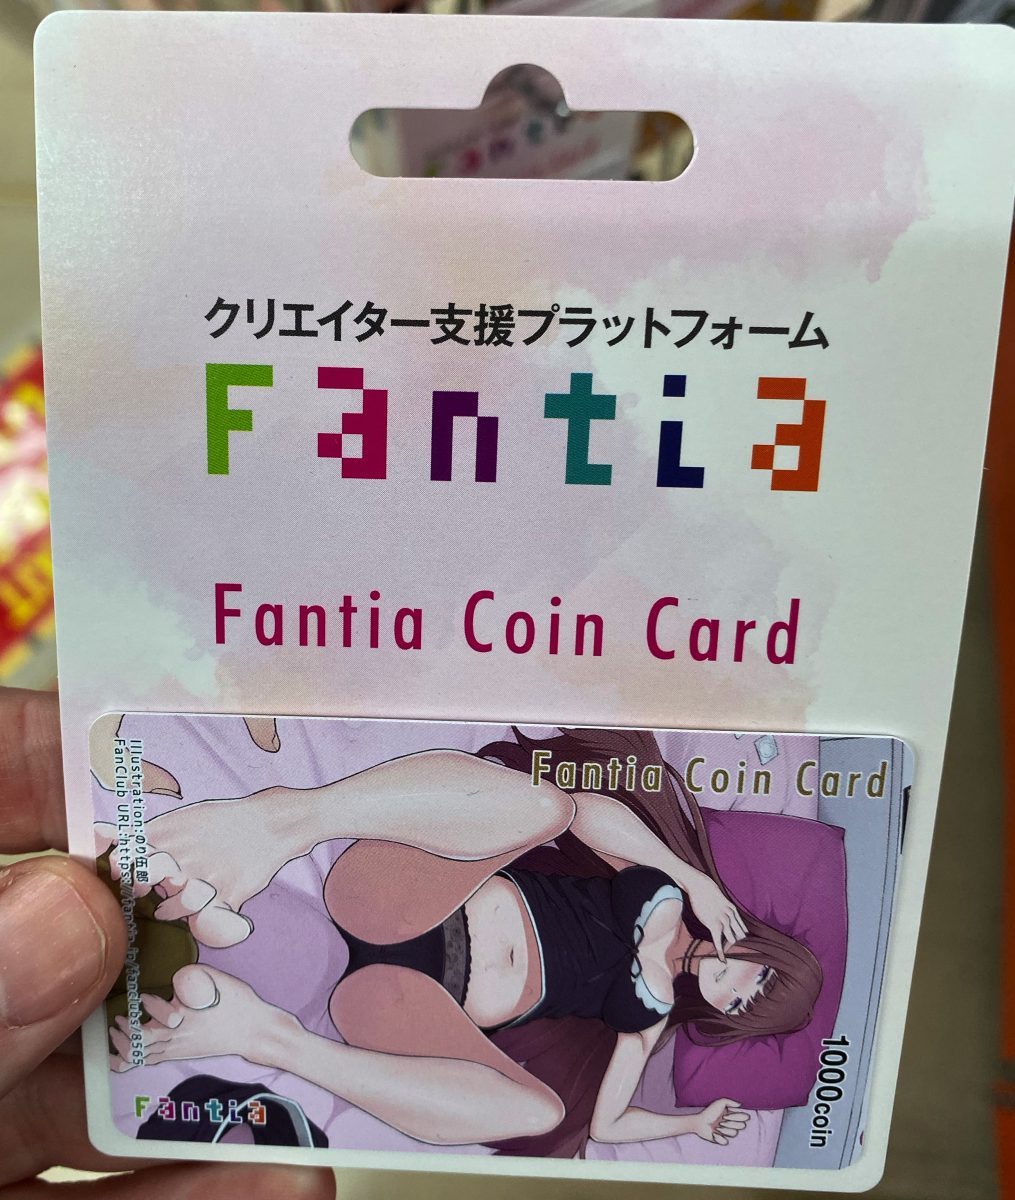 Japan's cashless payment wars: Fantia Coin Card